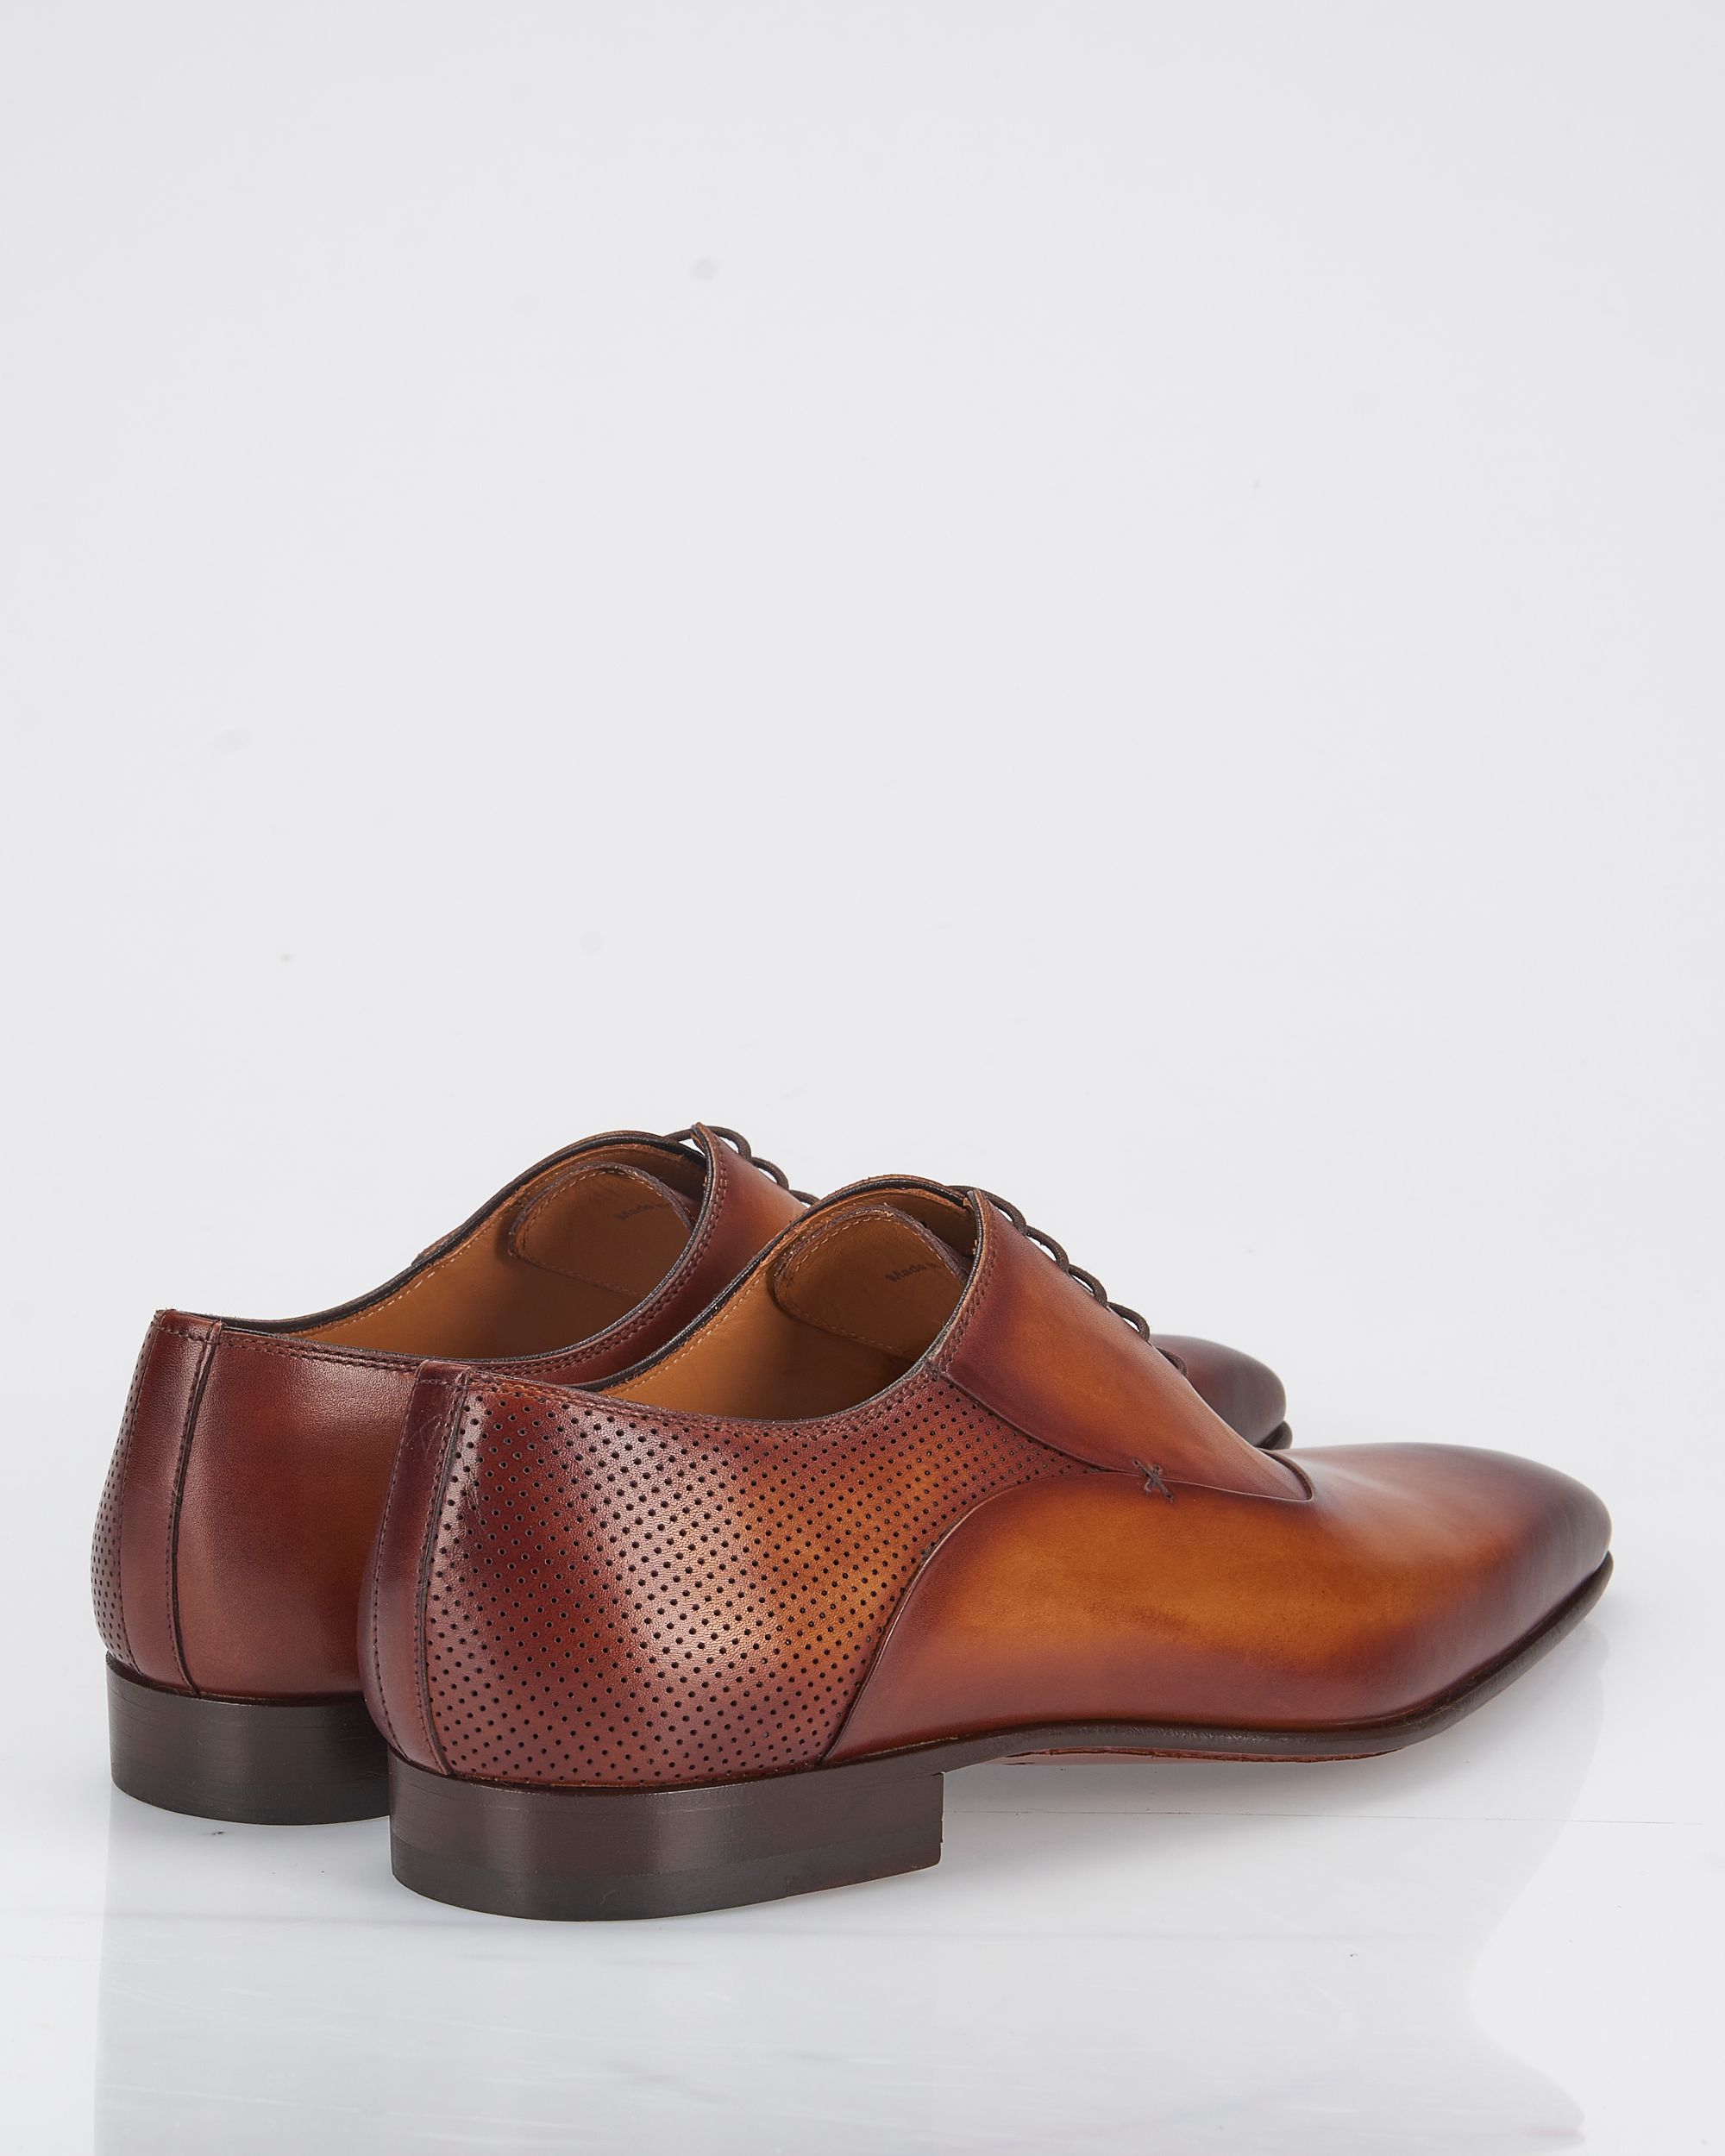 Magnanni Geklede schoenen Cognac 084911-001-41